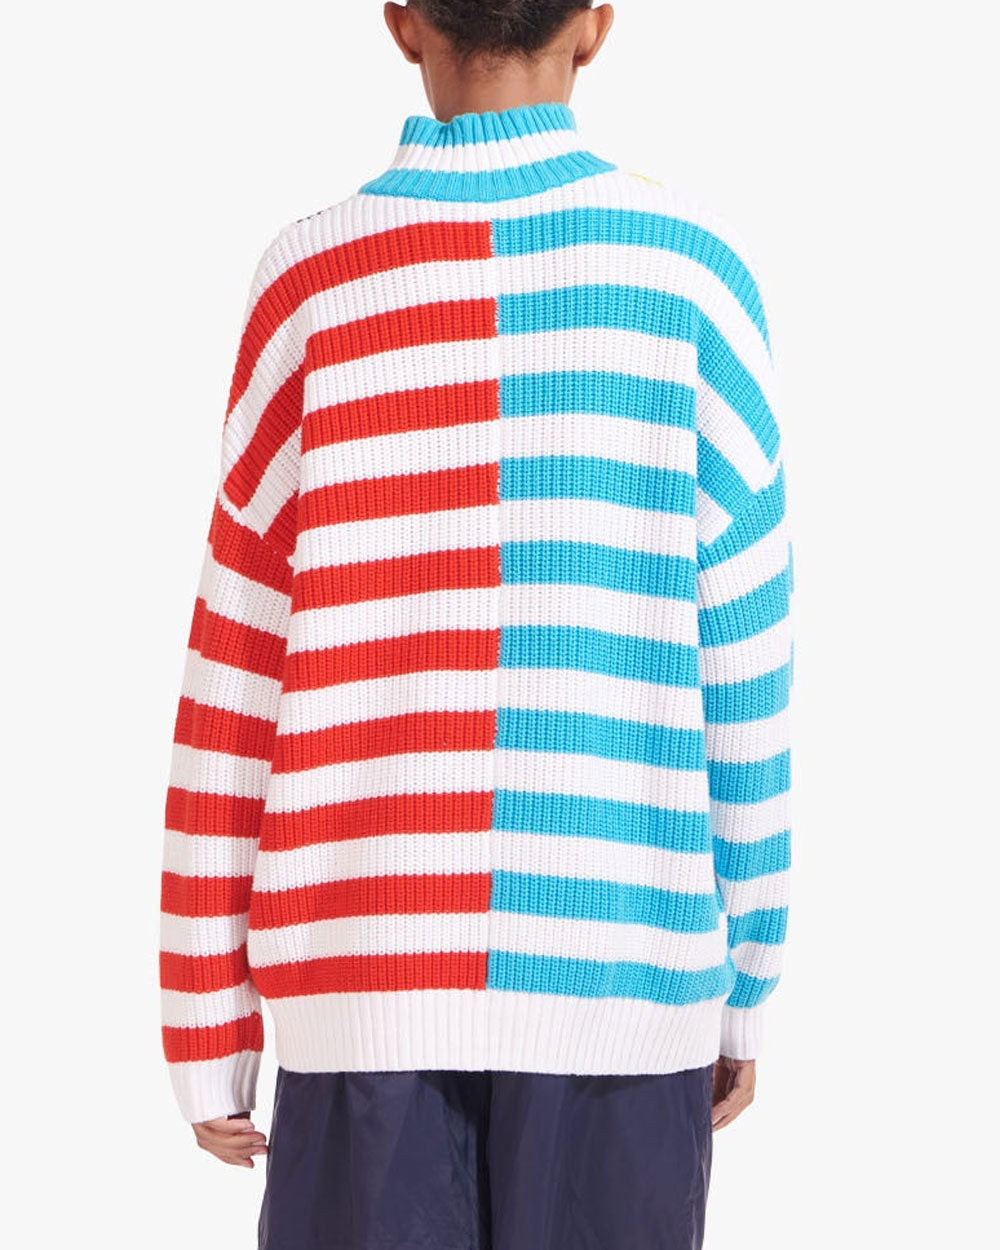 Captain Stripe Knit Hampton Quarter Zip Sweater